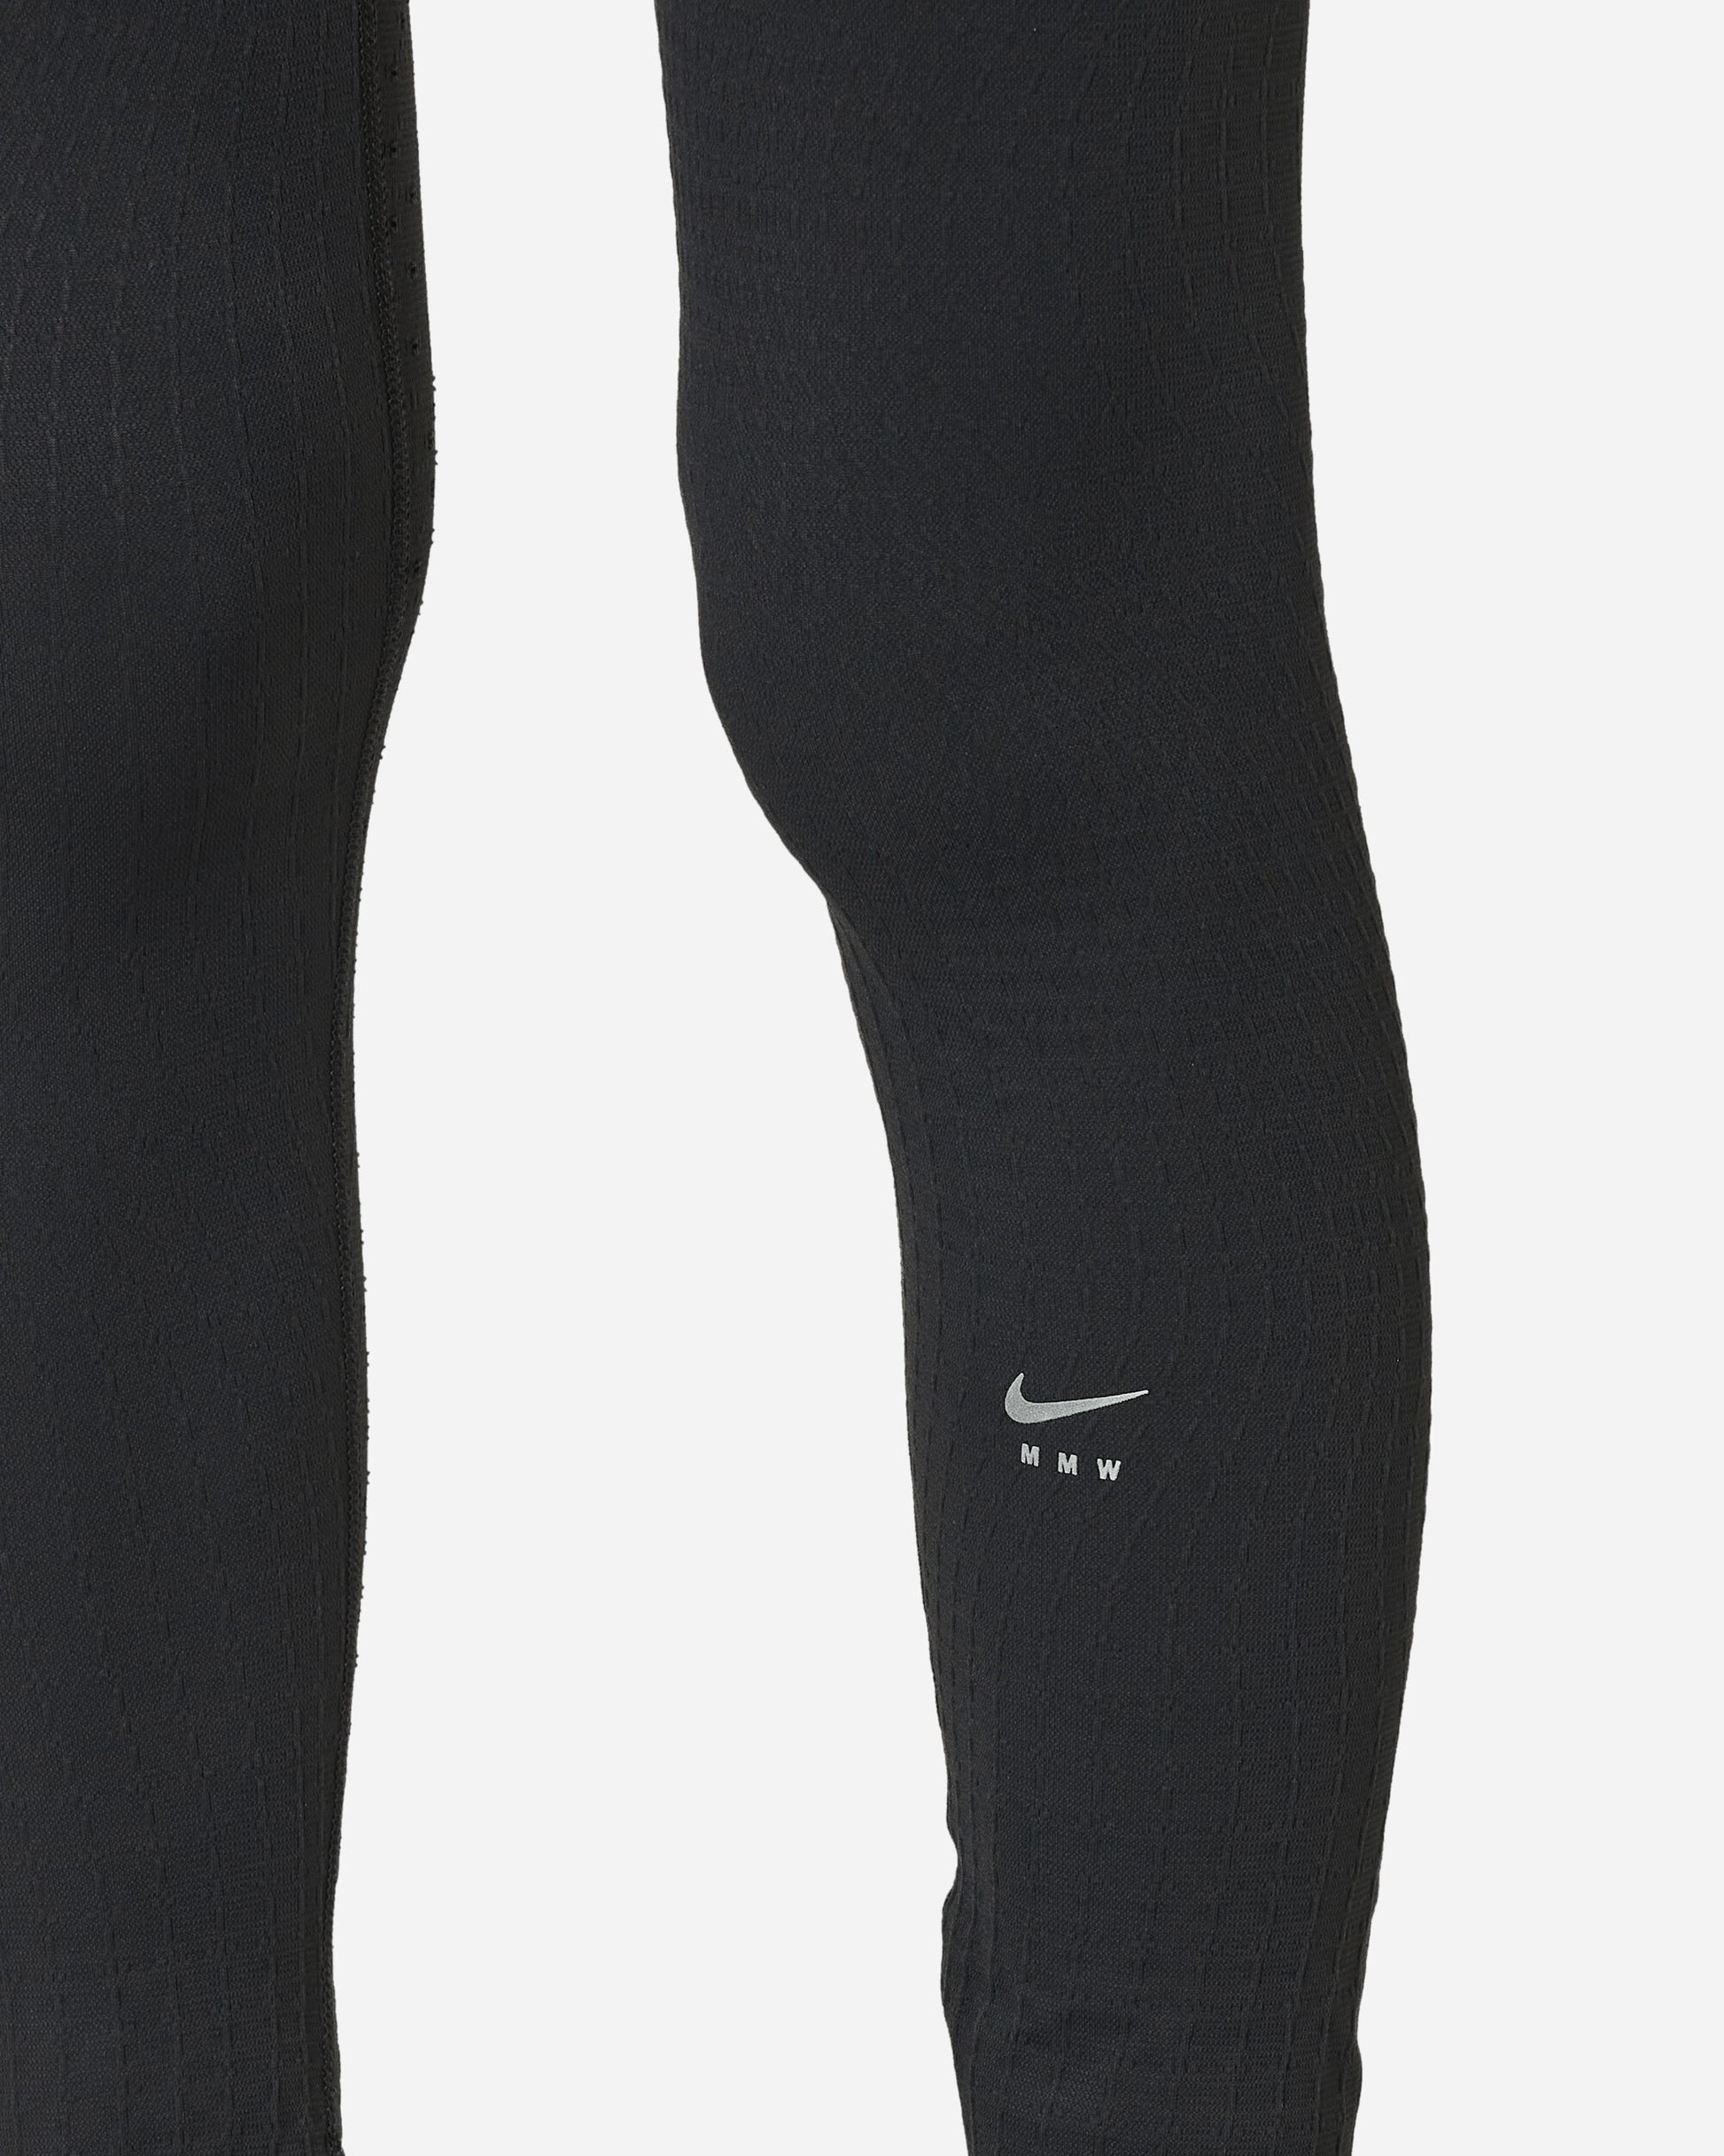 Nike Wmns Nrg Mt Tight Black Pants Sweatpants DR5370-010